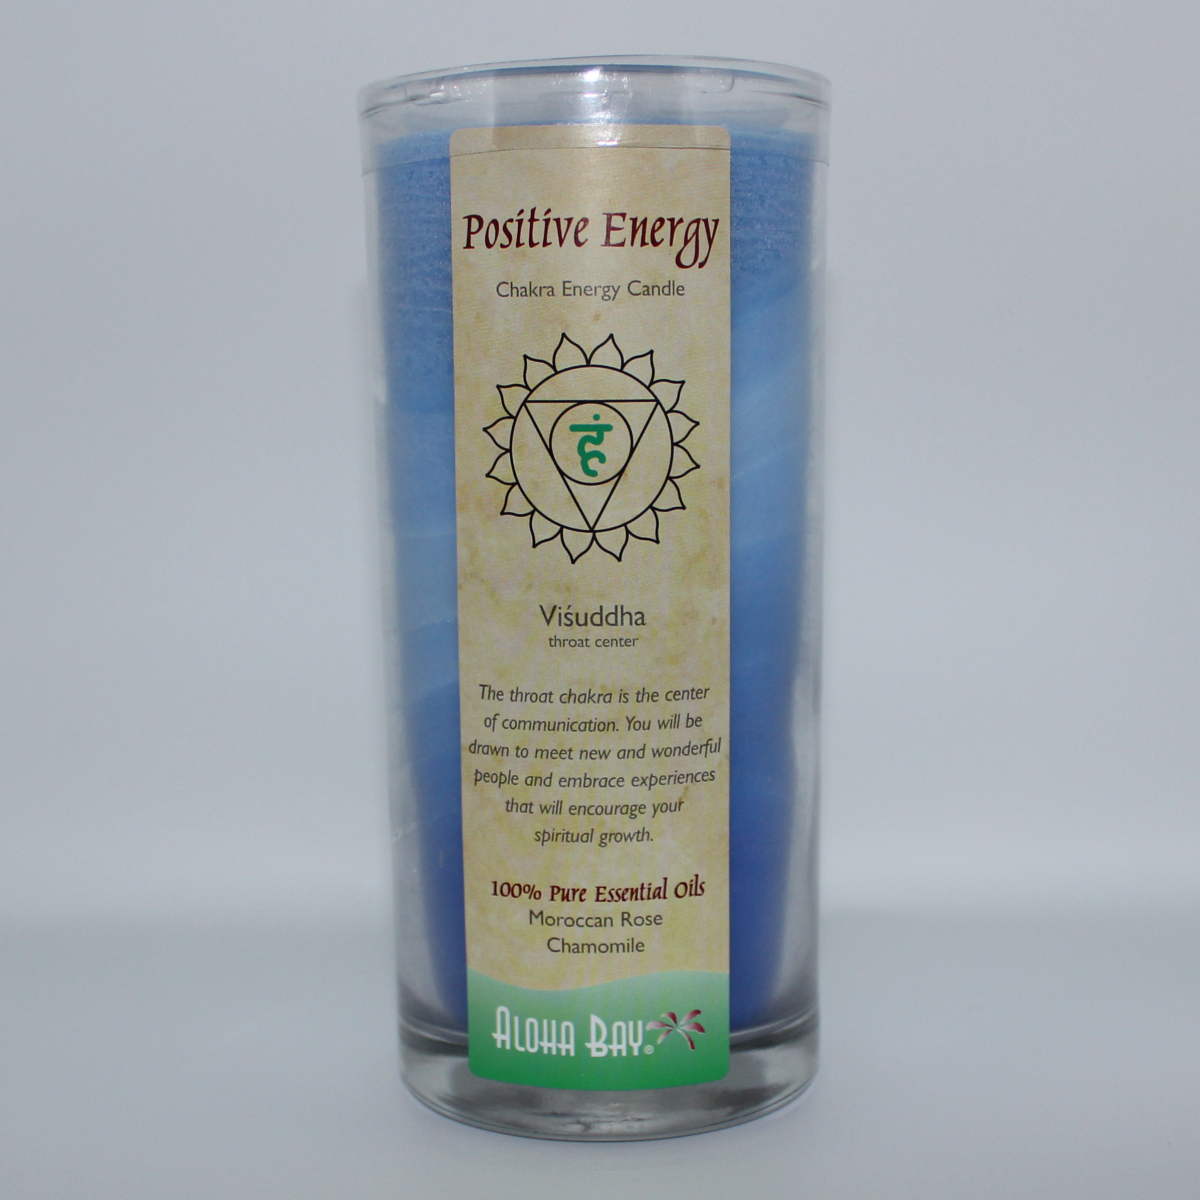 Positive Energy - Chakra Energy Candle - Jar 11oz